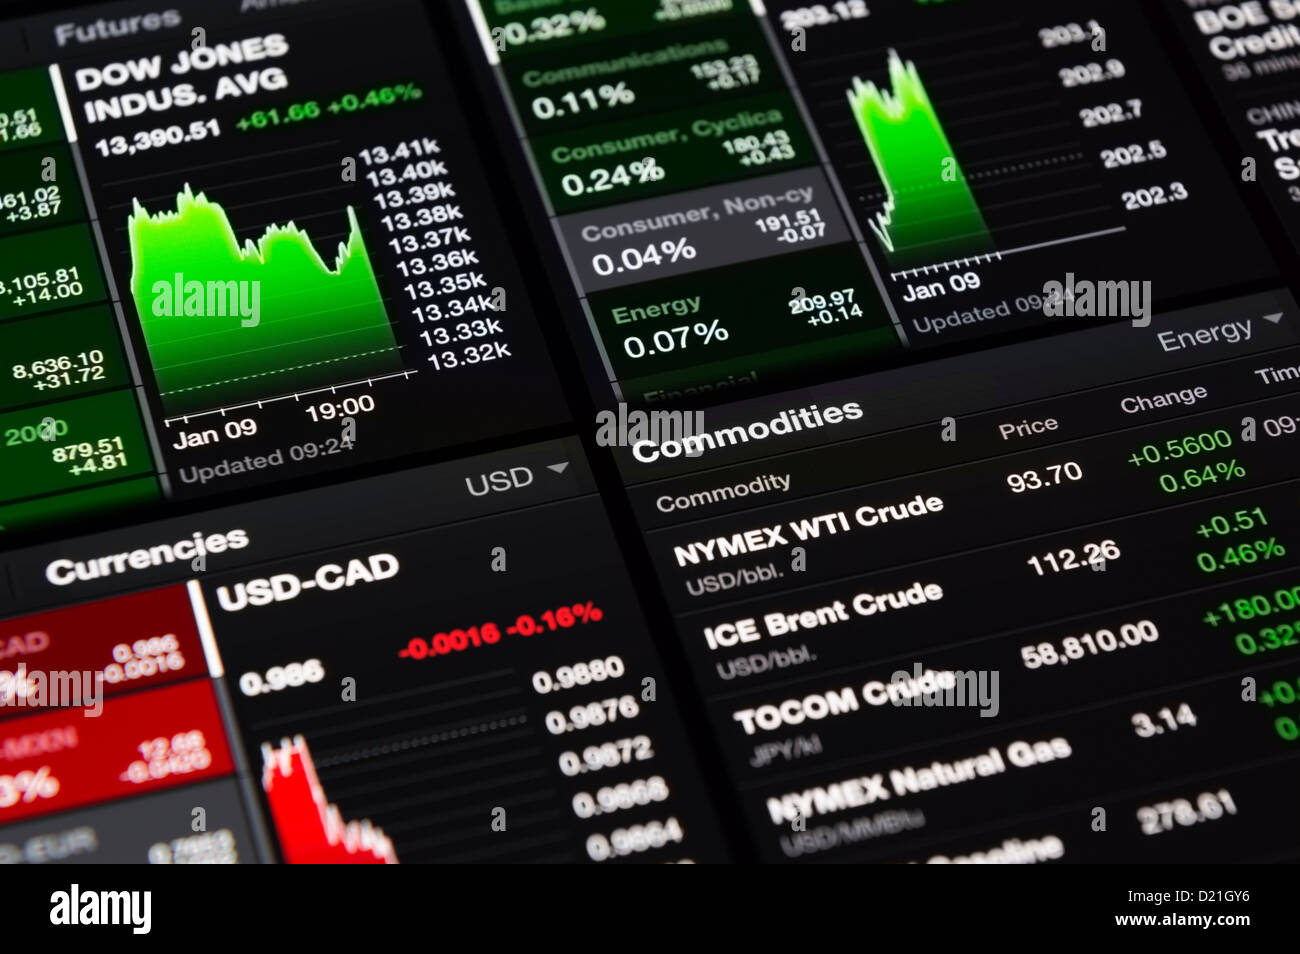 data financial intraday market news stock